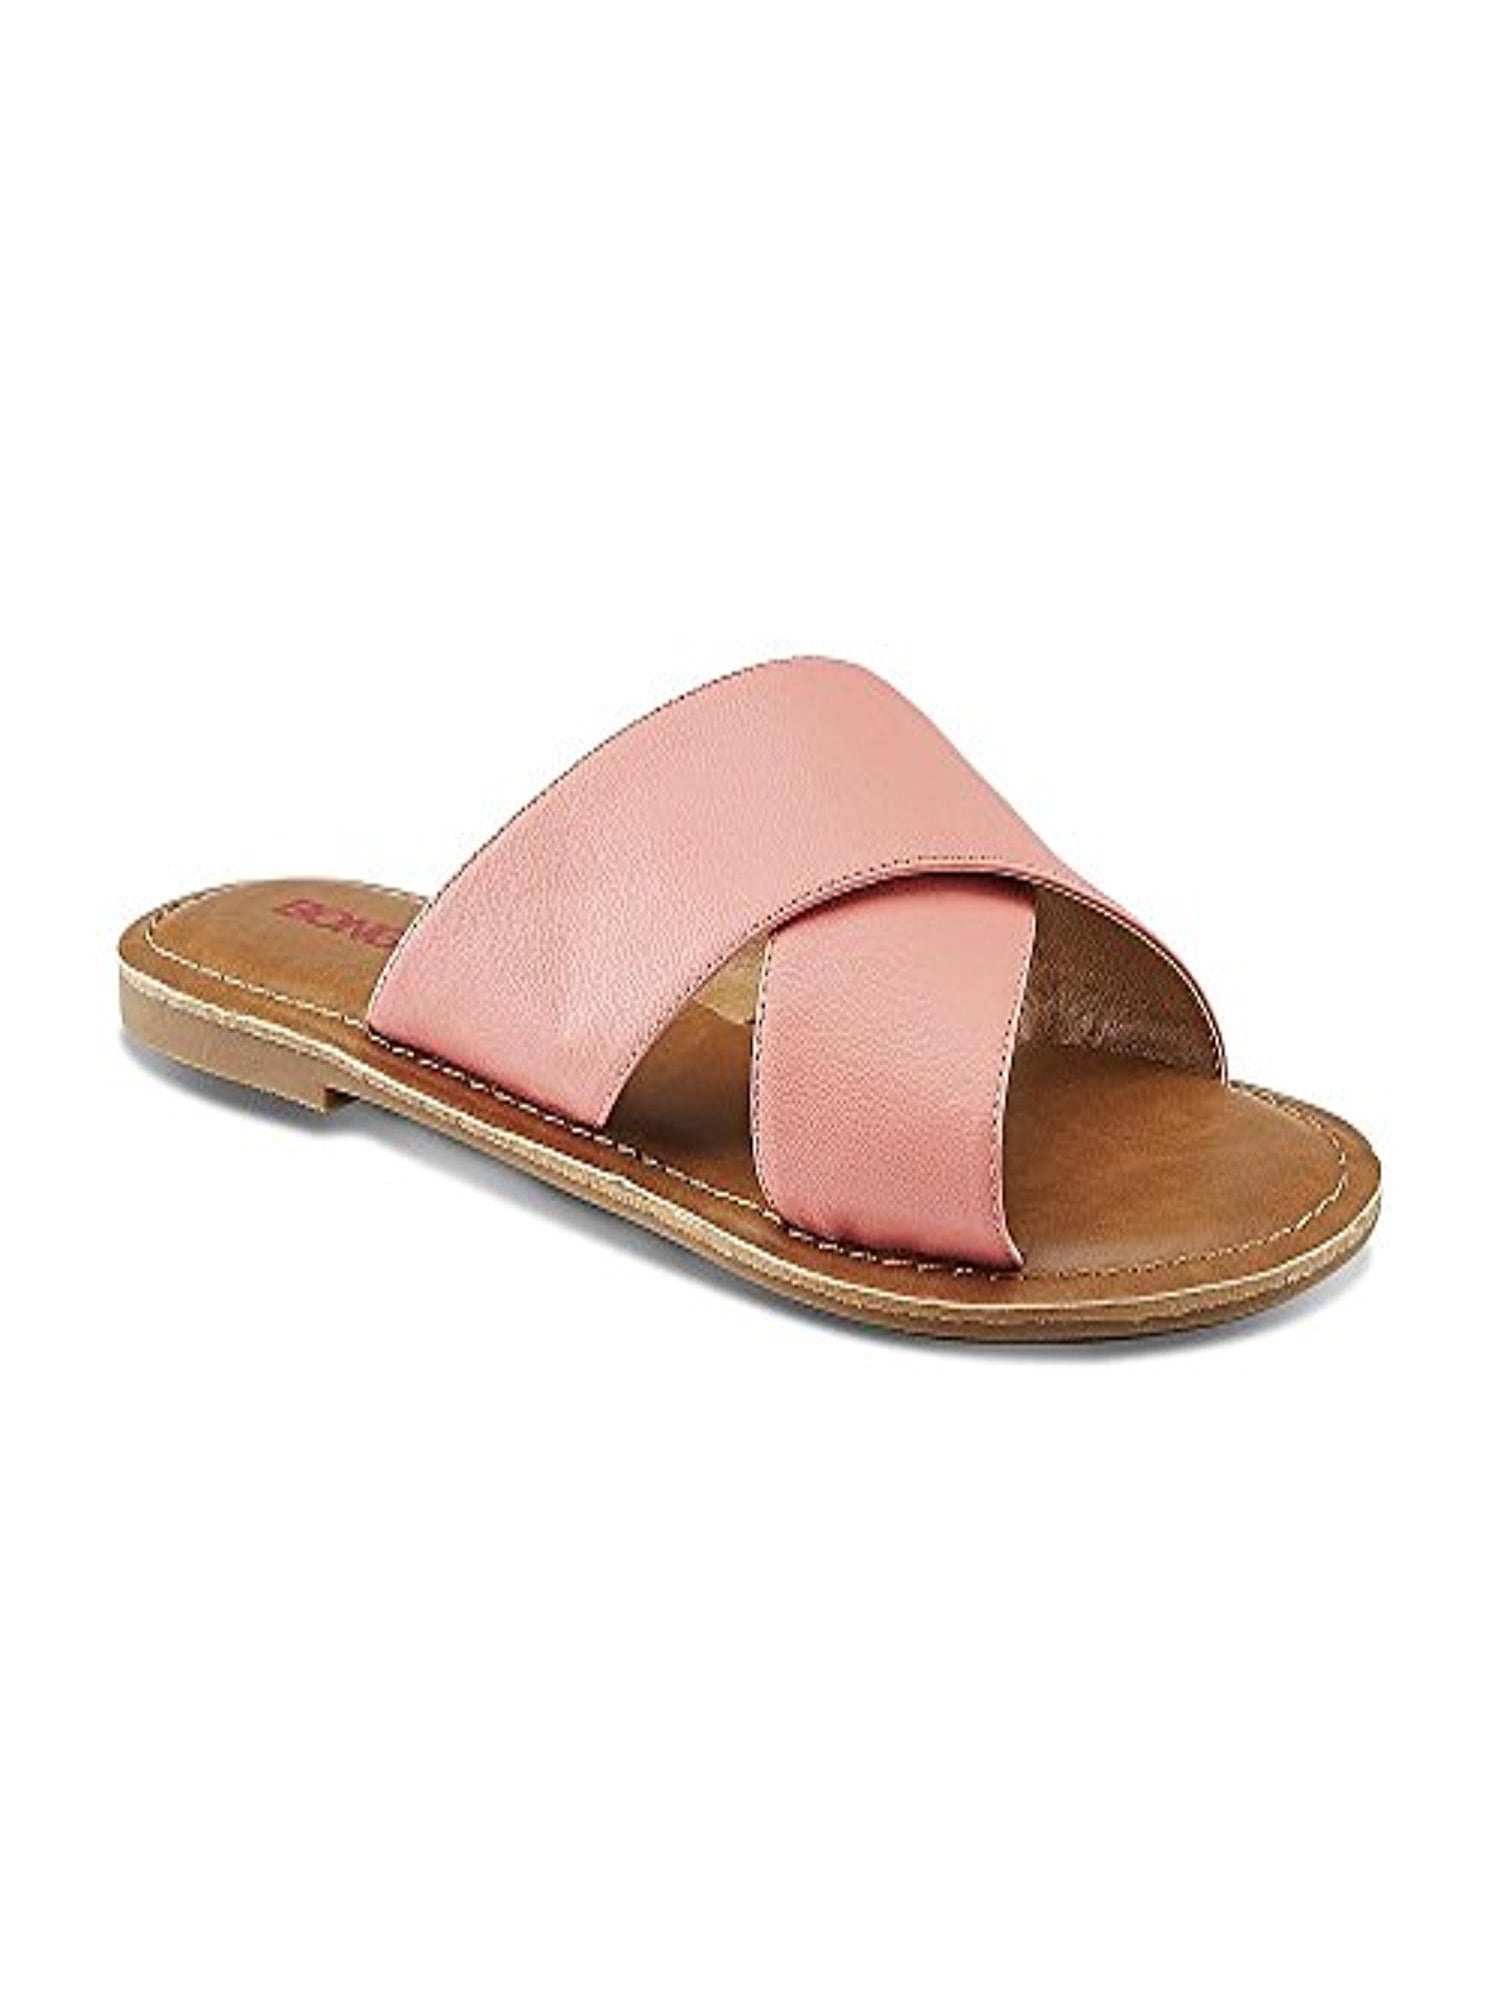 Bongo Lila Women's Slide Sandal, Coral, Size 8 - Walmart.com